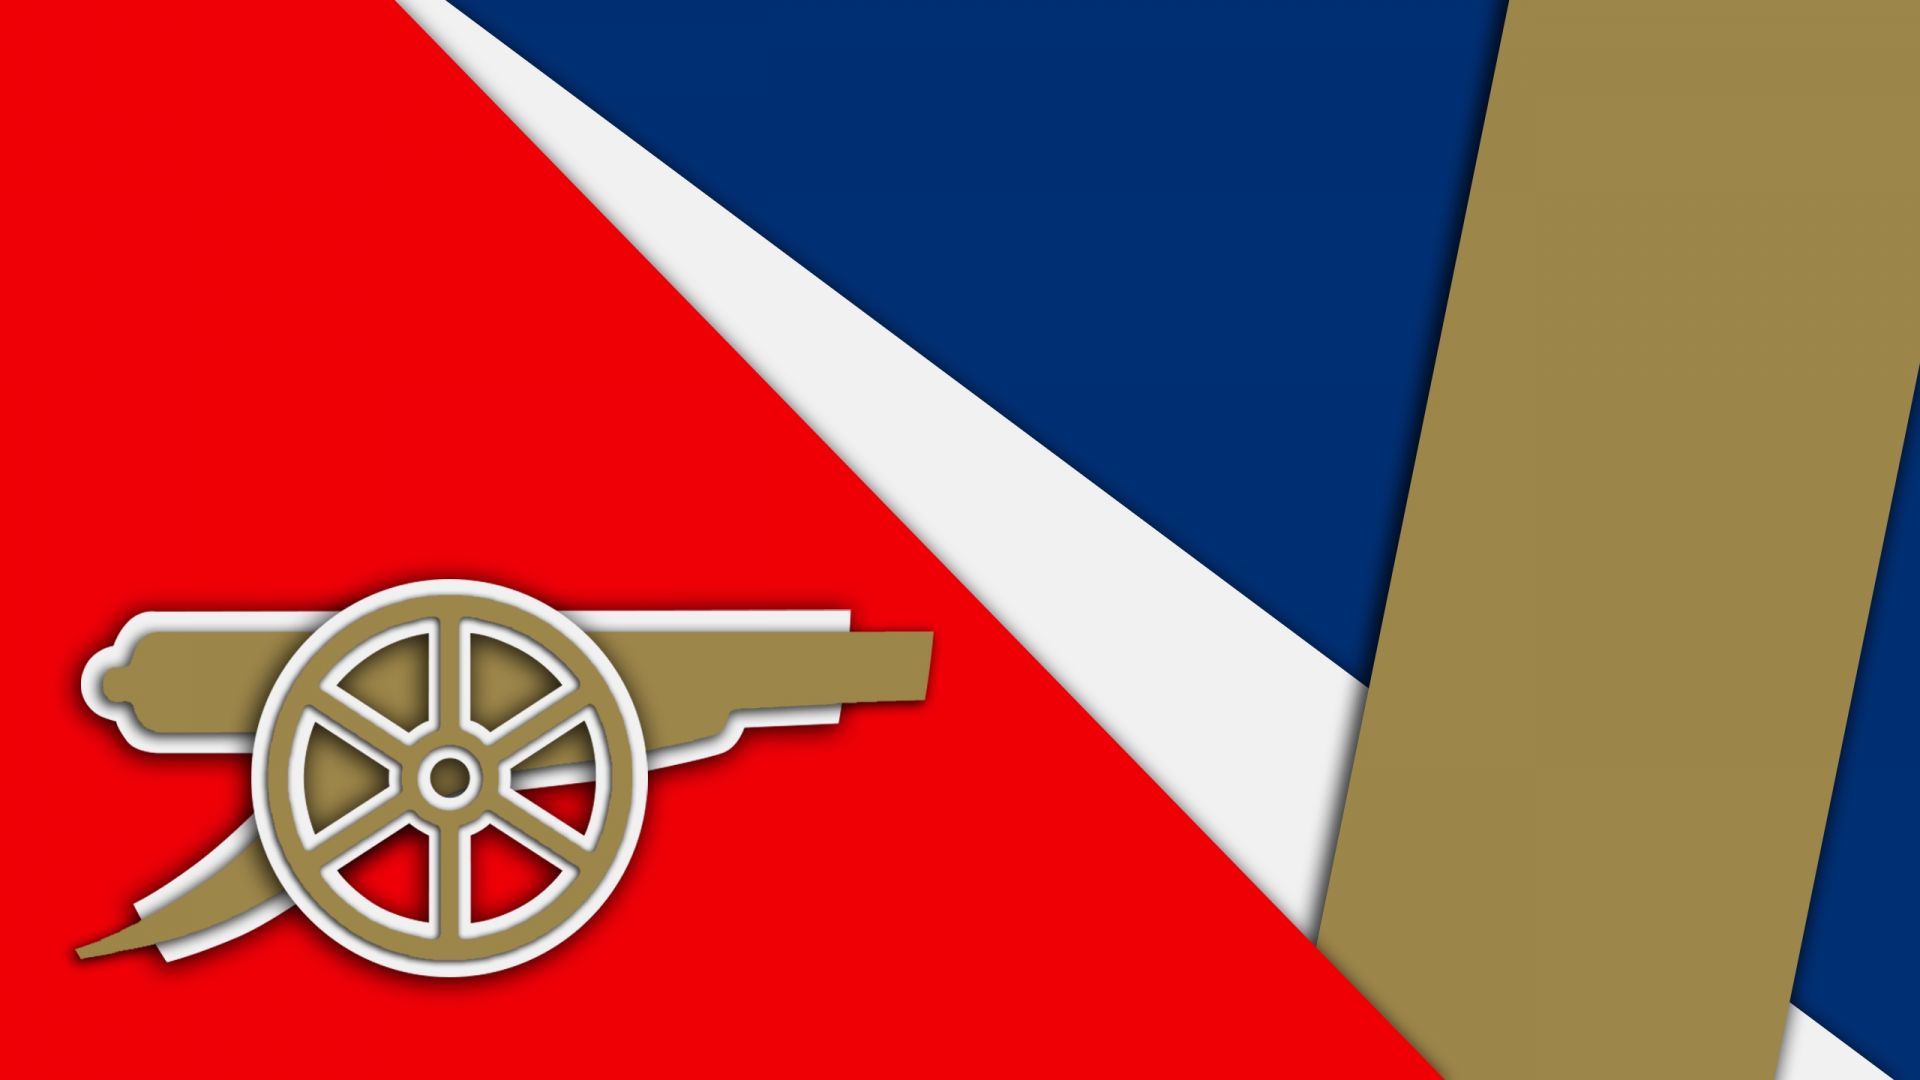 Wallpaper Arsenal F. C., logo, material design, tank